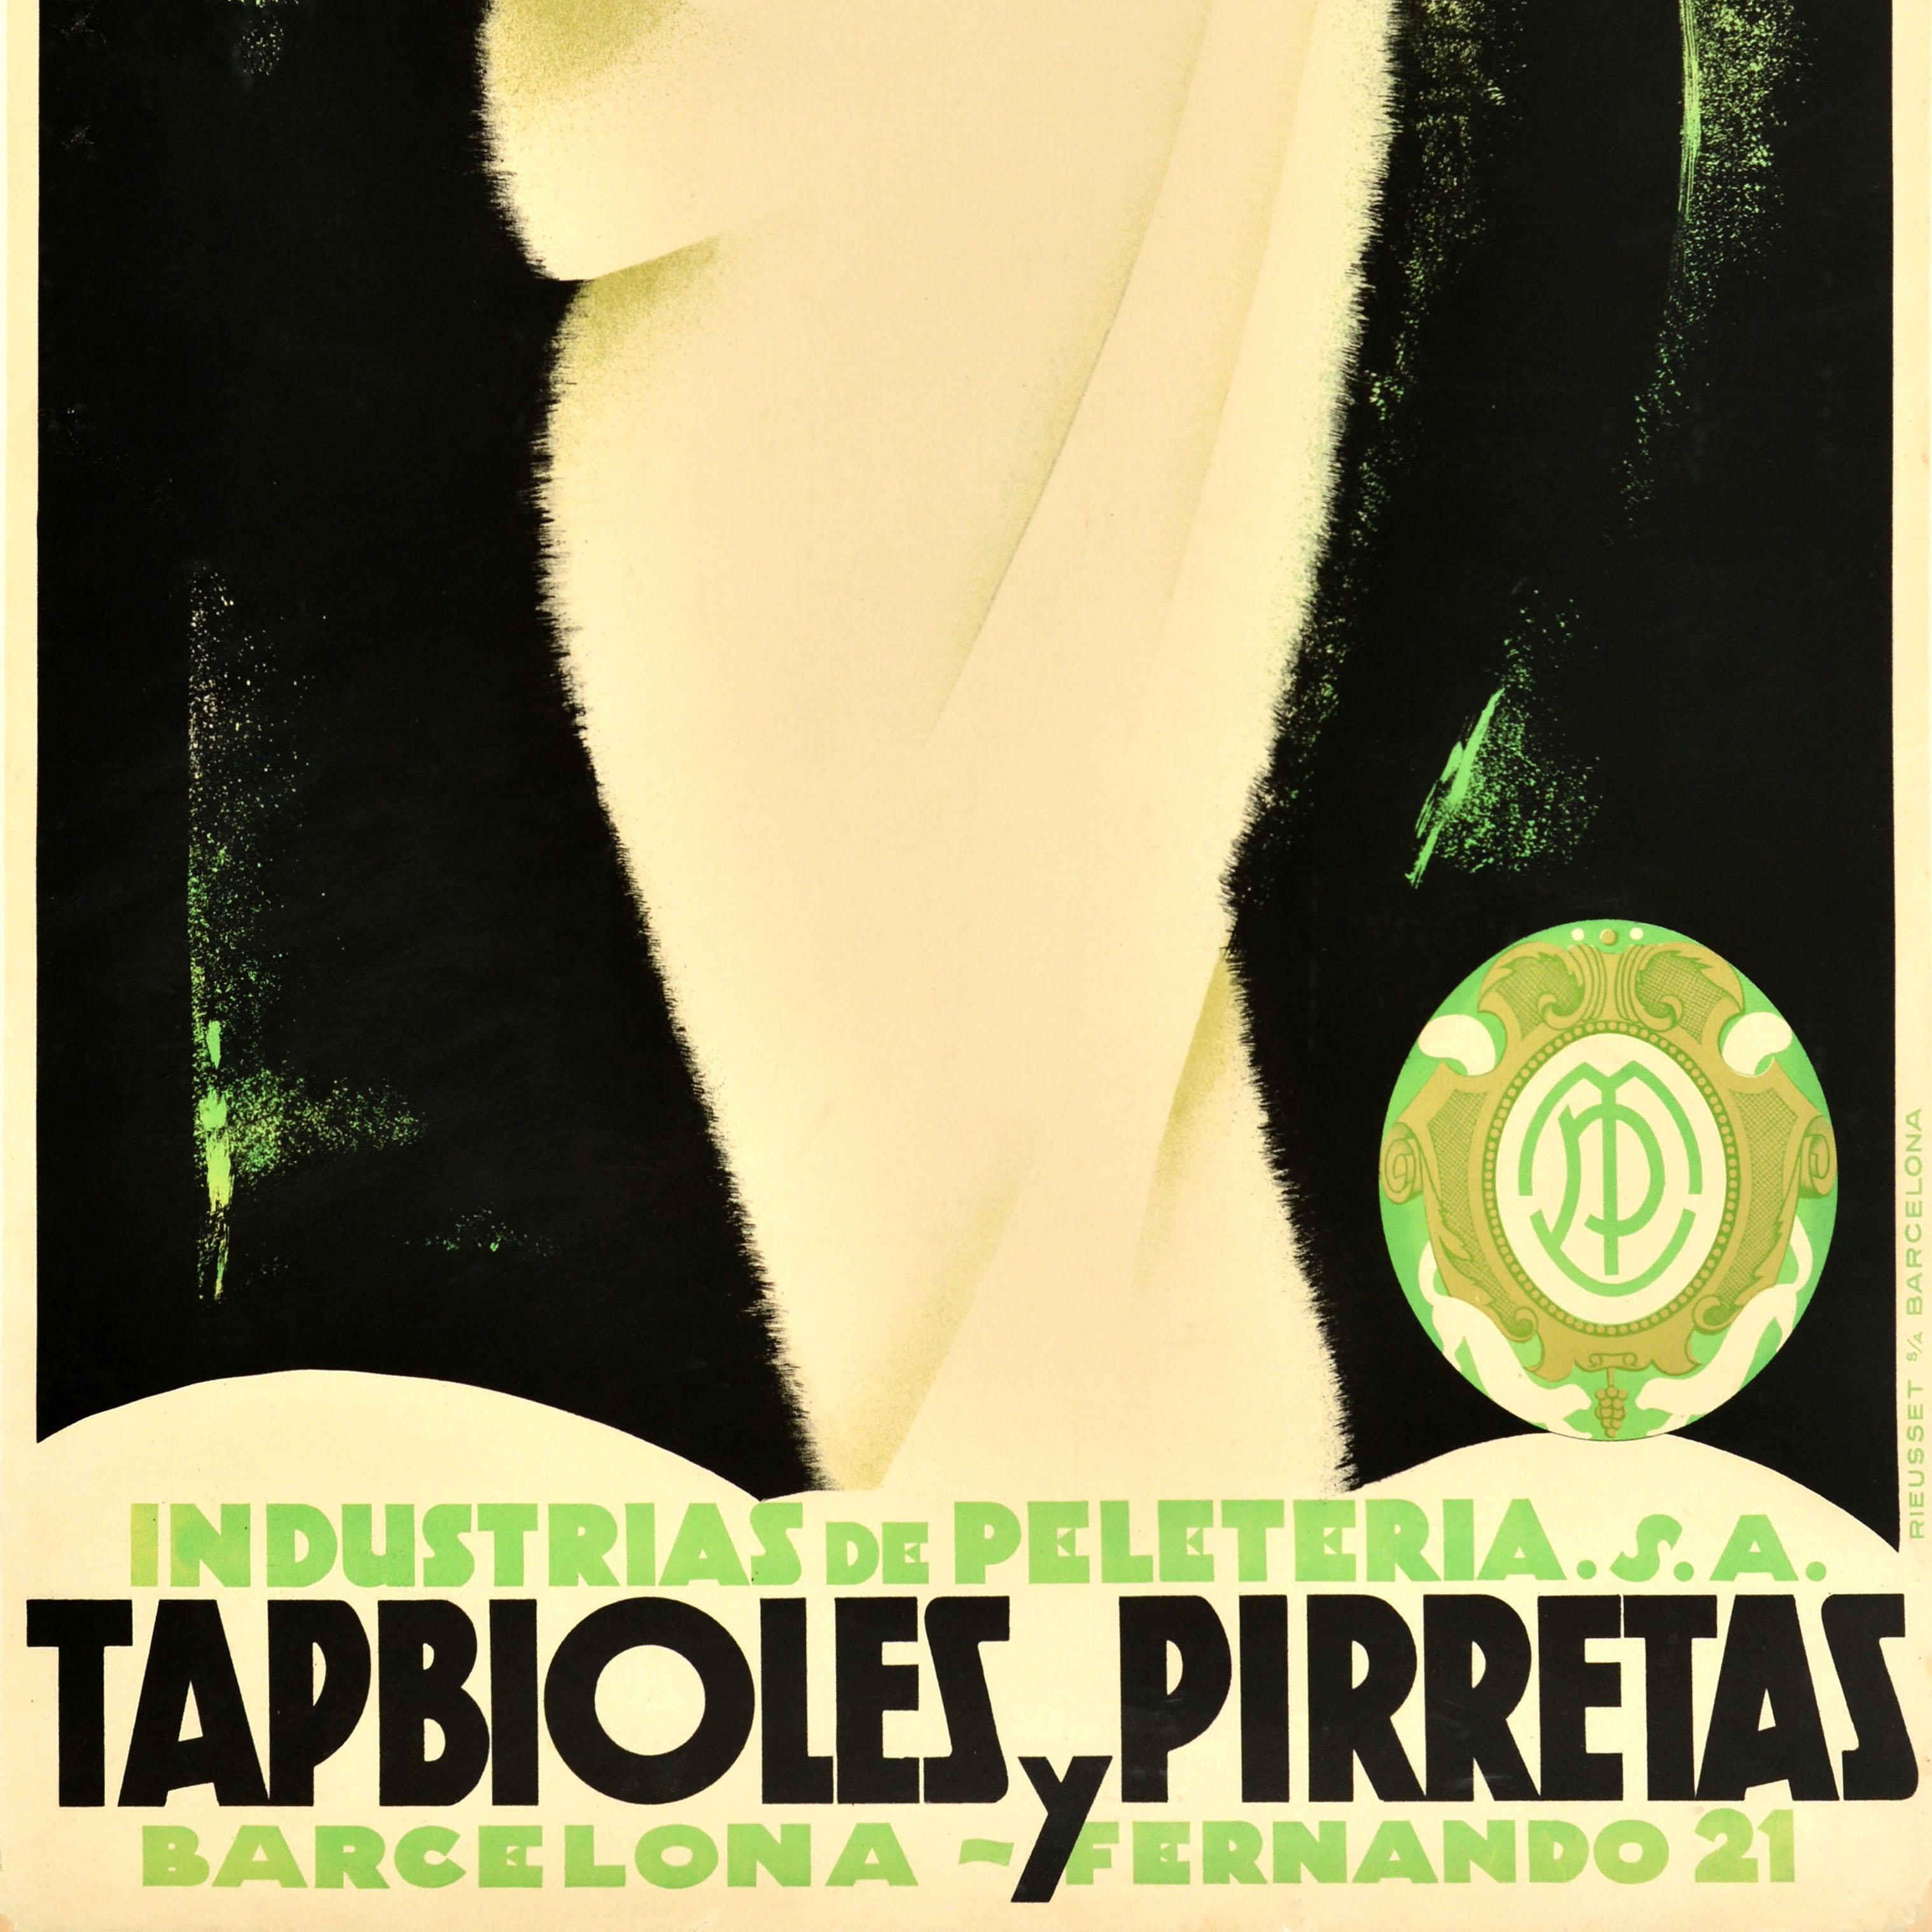 Original Vintage Spanish Advertising Poster Tapbioles Y Pirretas Fur Clothing In Good Condition For Sale In London, GB